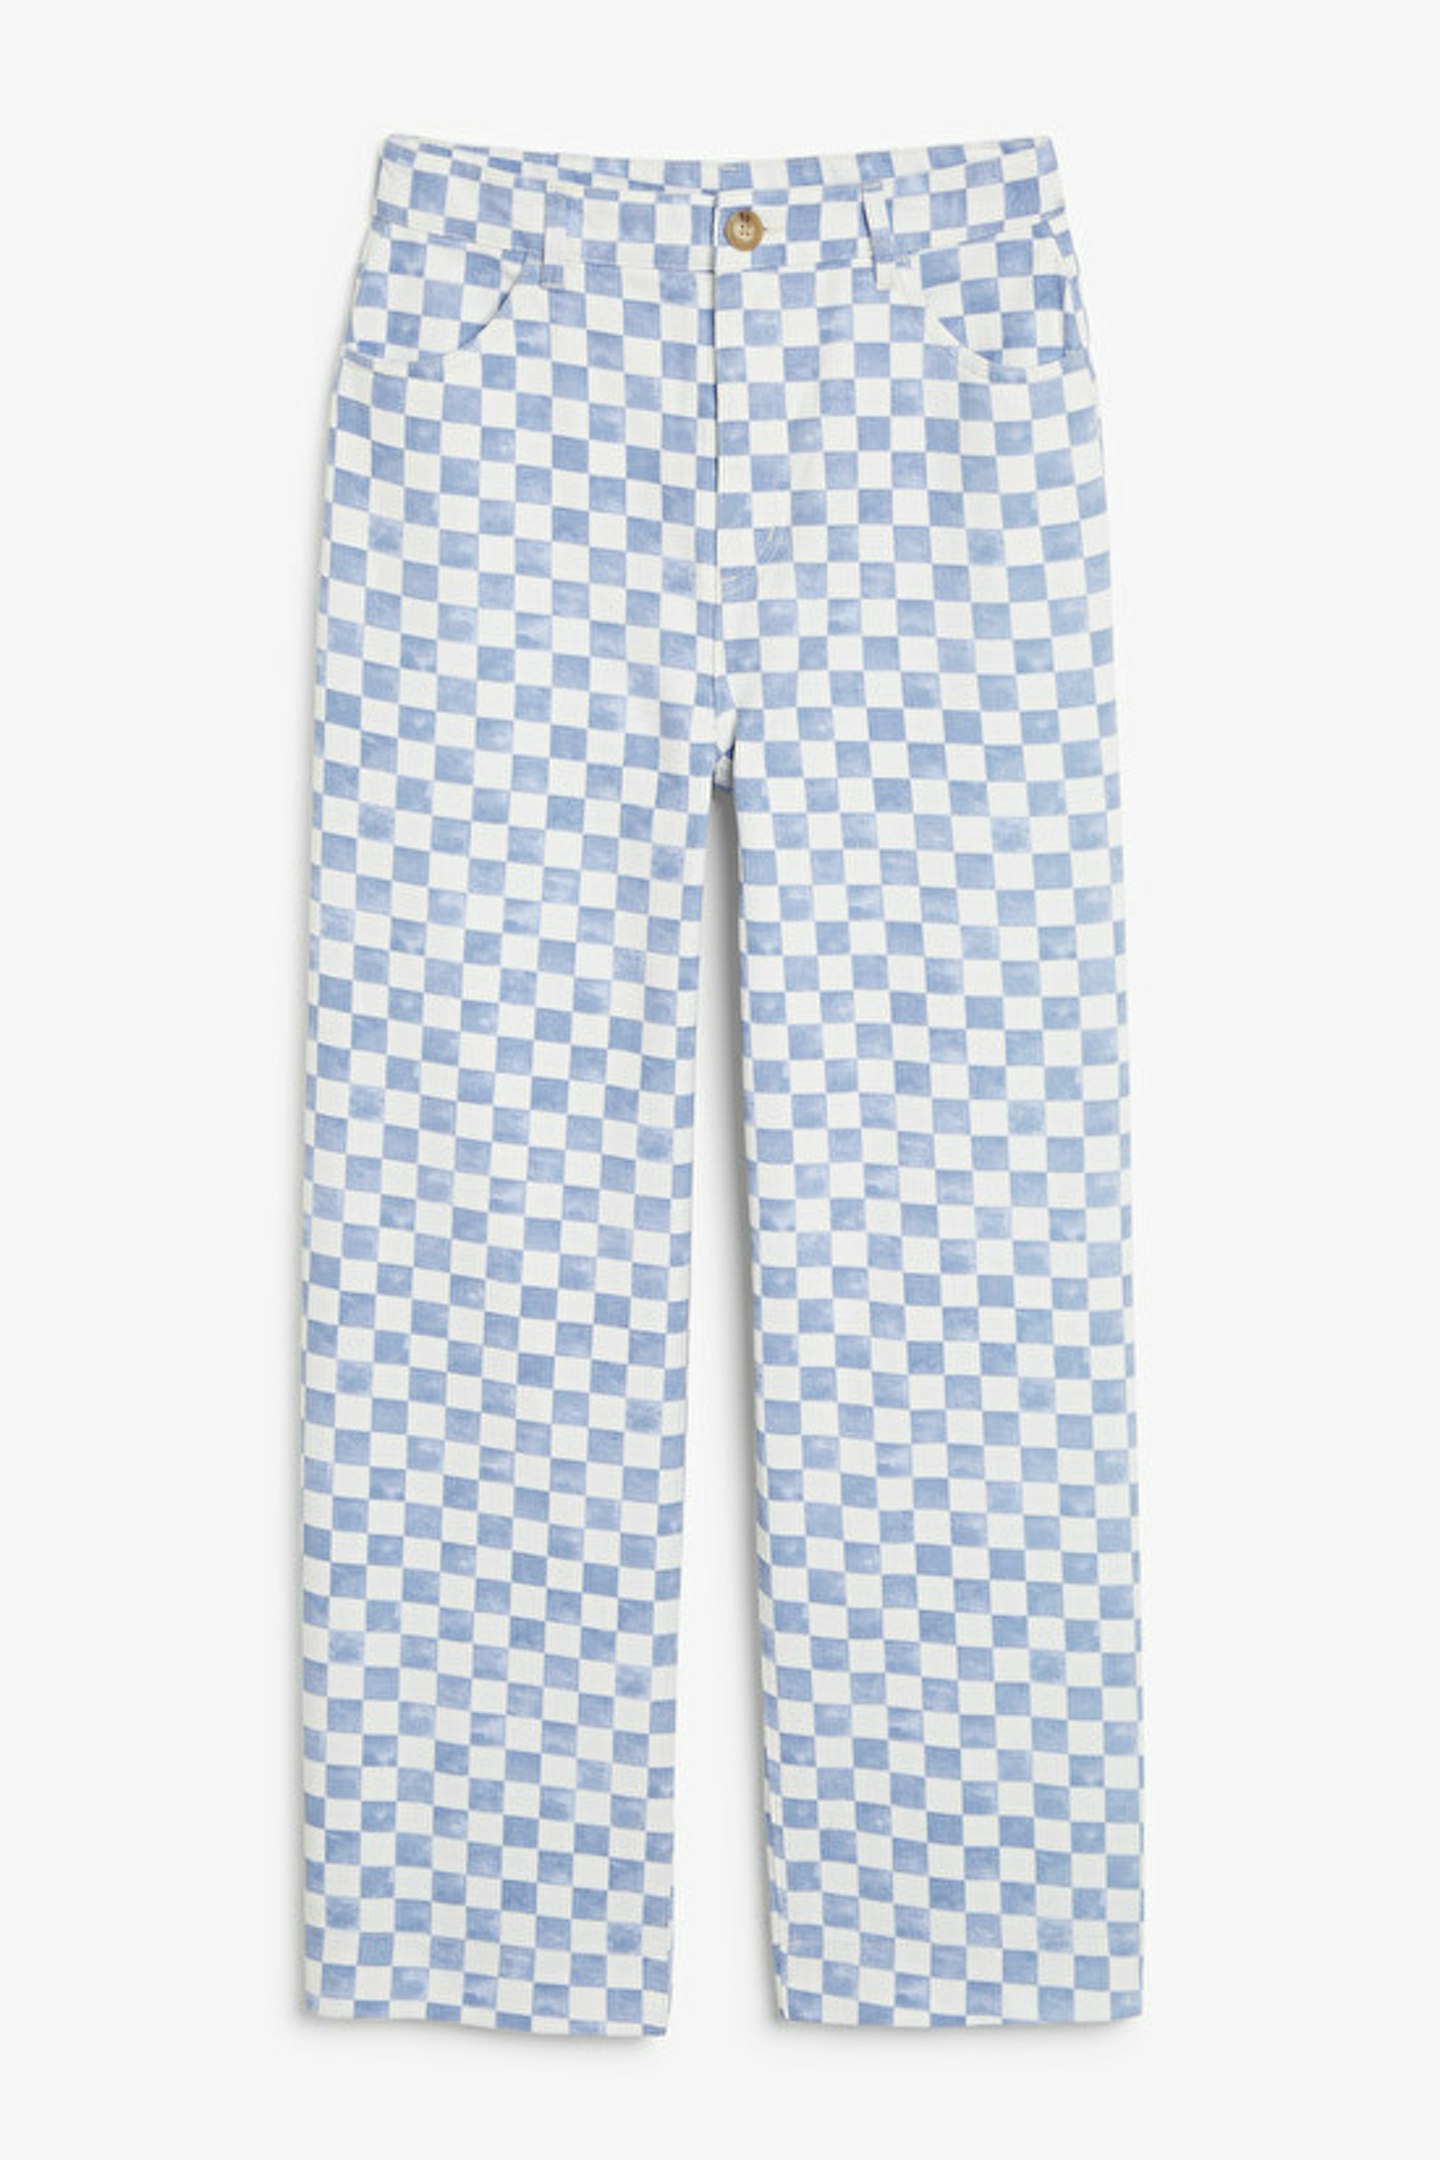 Monki, Straight-leg cotton trousers, £30